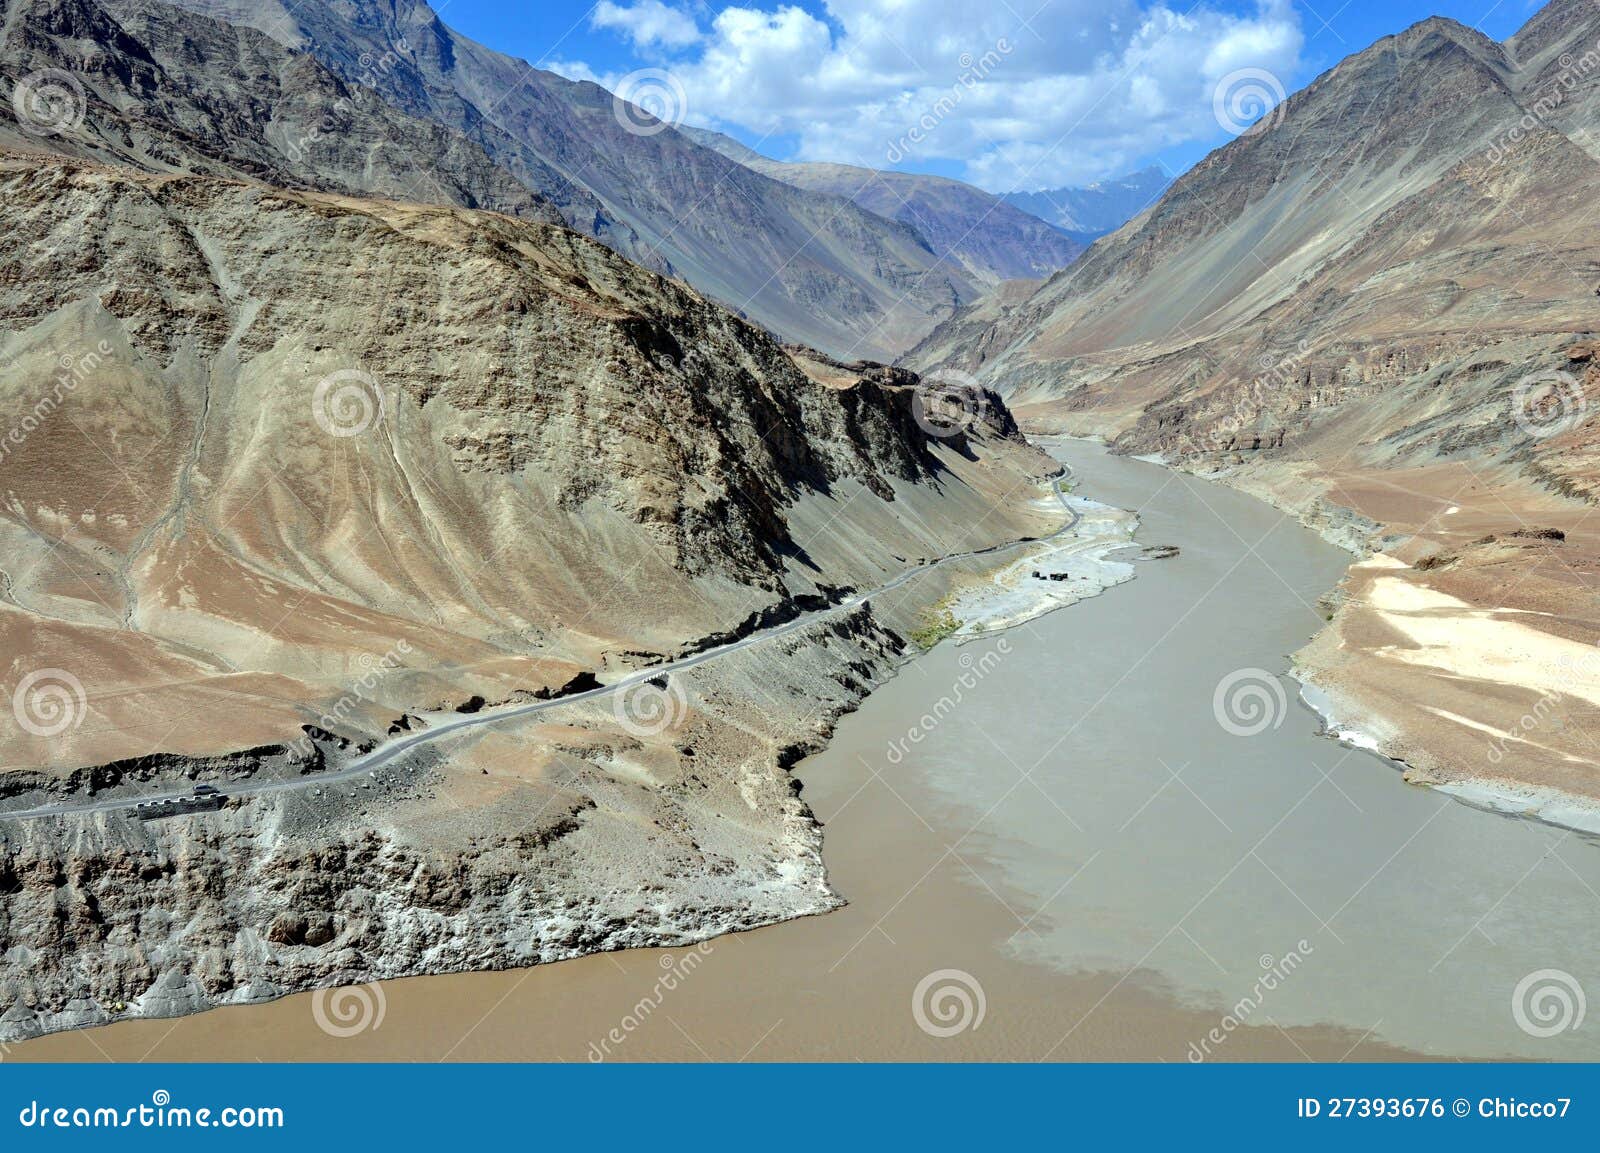 india - ladakh landscape with indus river